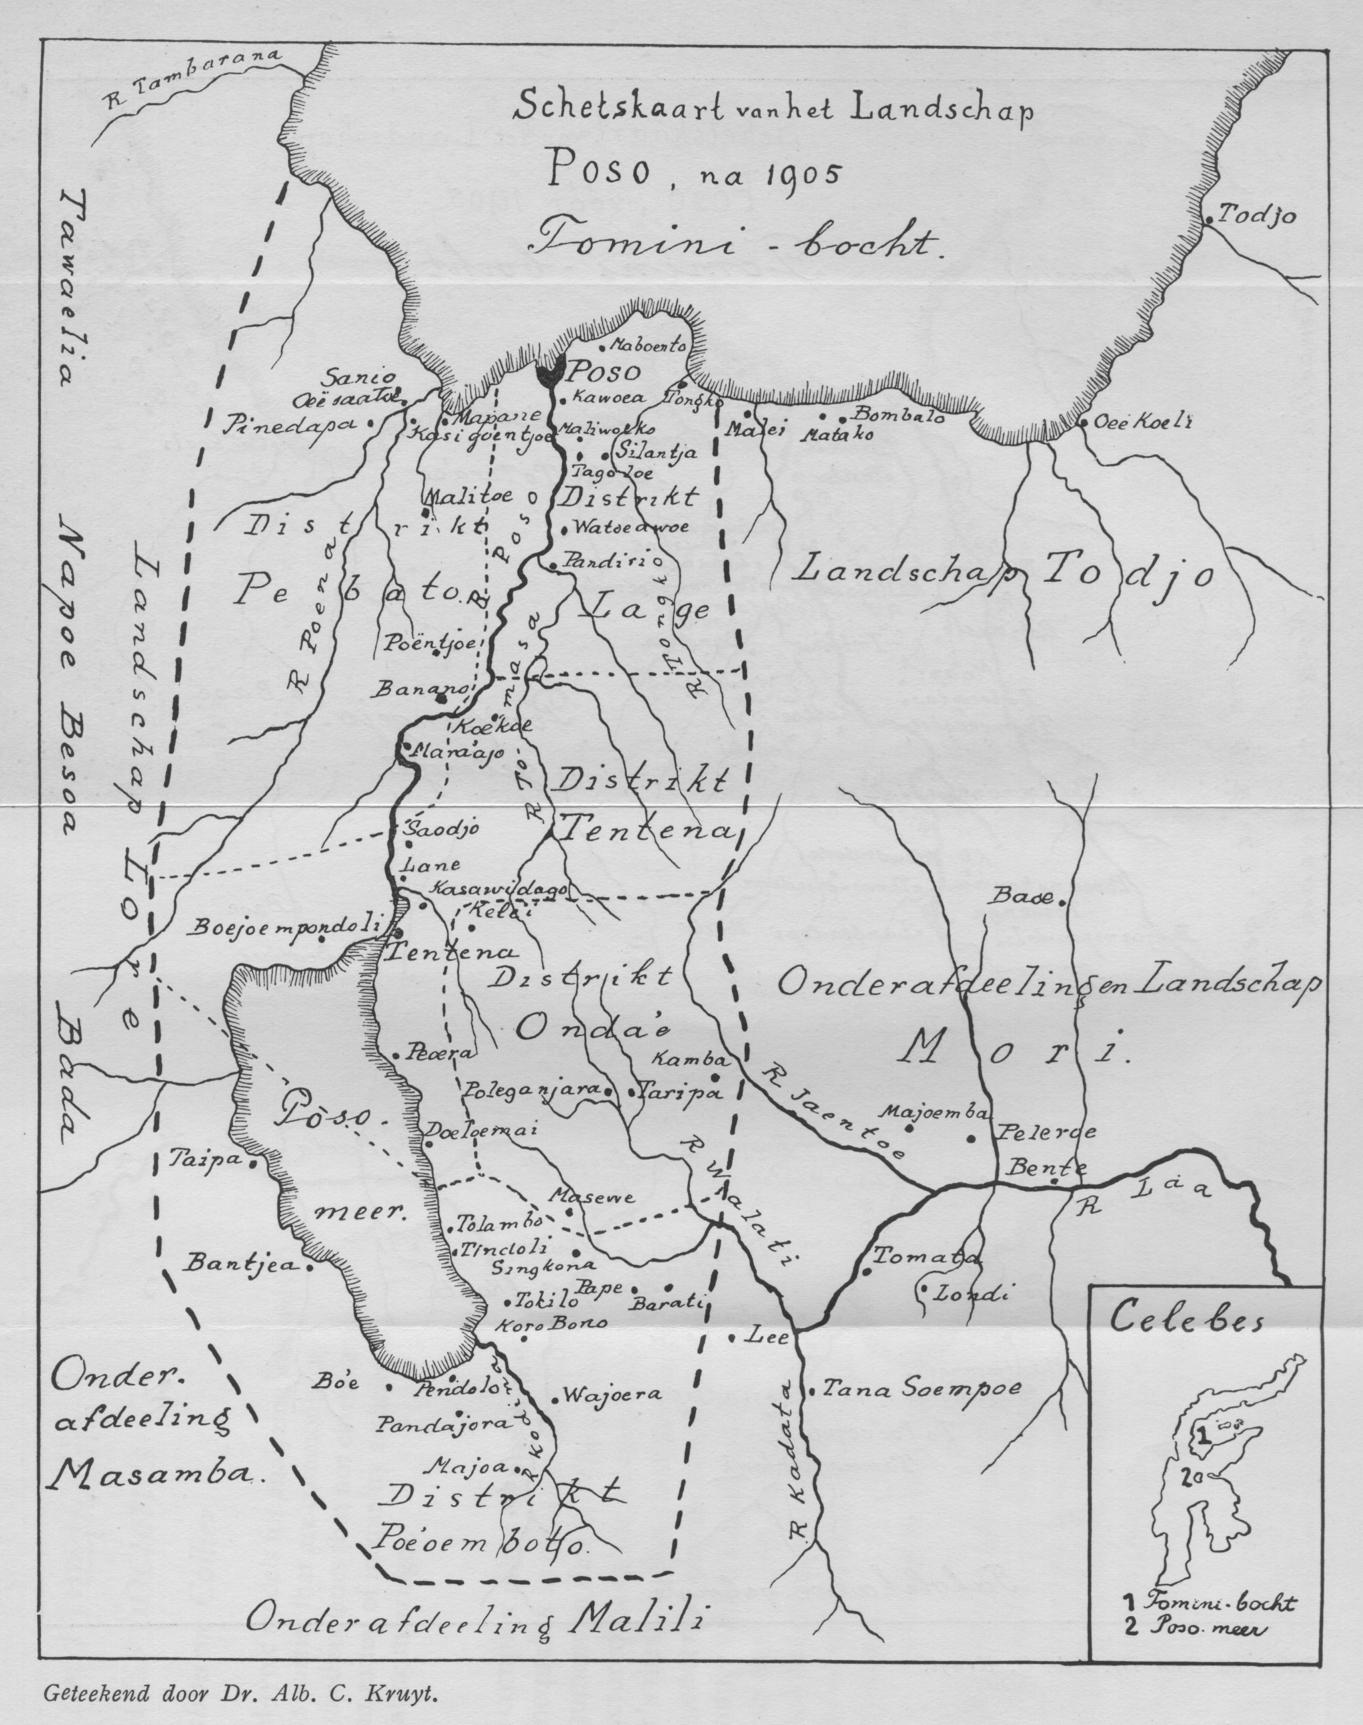 Peta Daerah Poso oleh Albert C. Kruyt (1905)